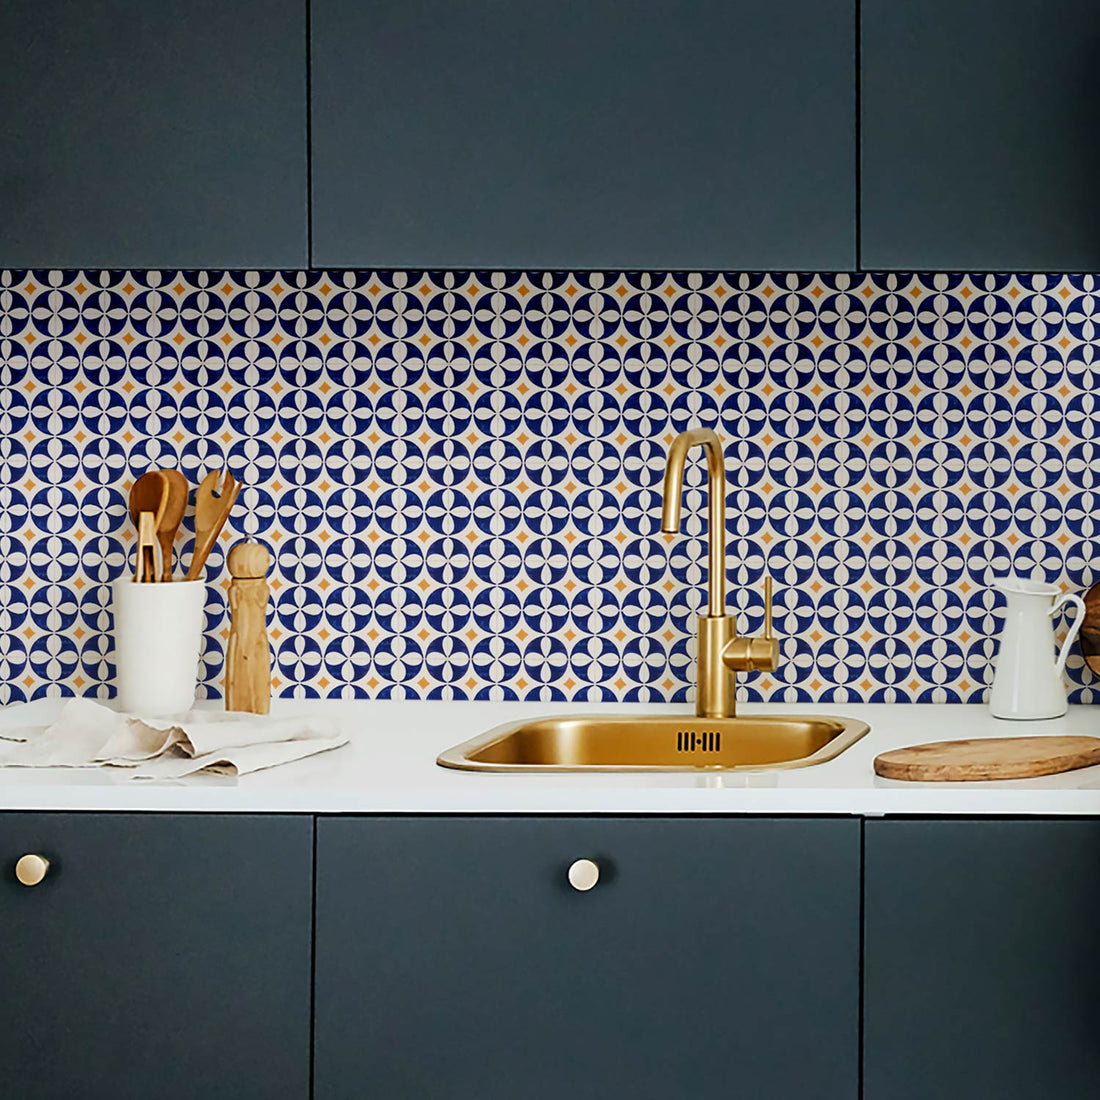 blue and yellow design backsplash panels in modern kitchen